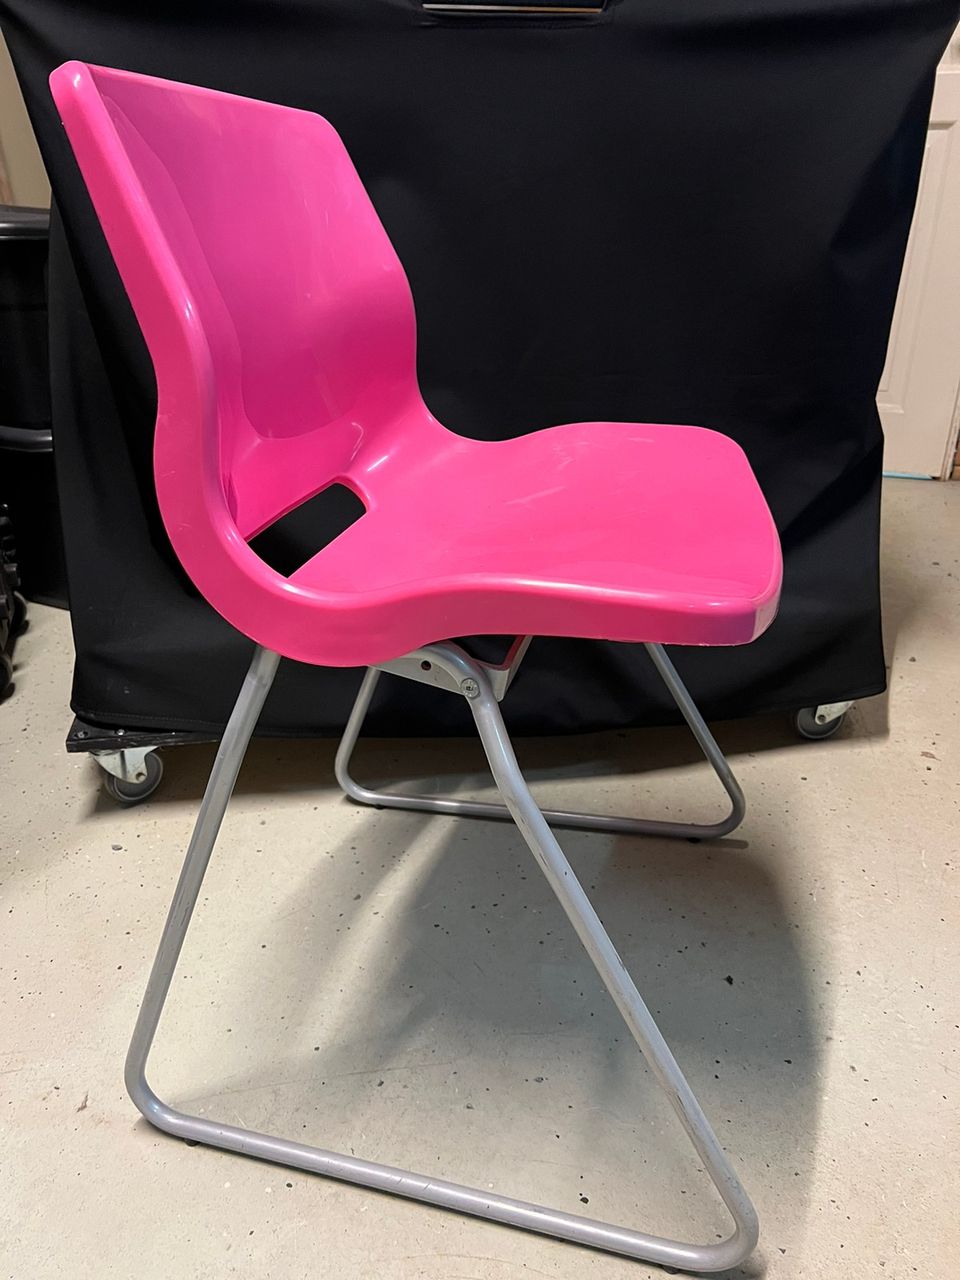 Pinkki IKEA tuoli